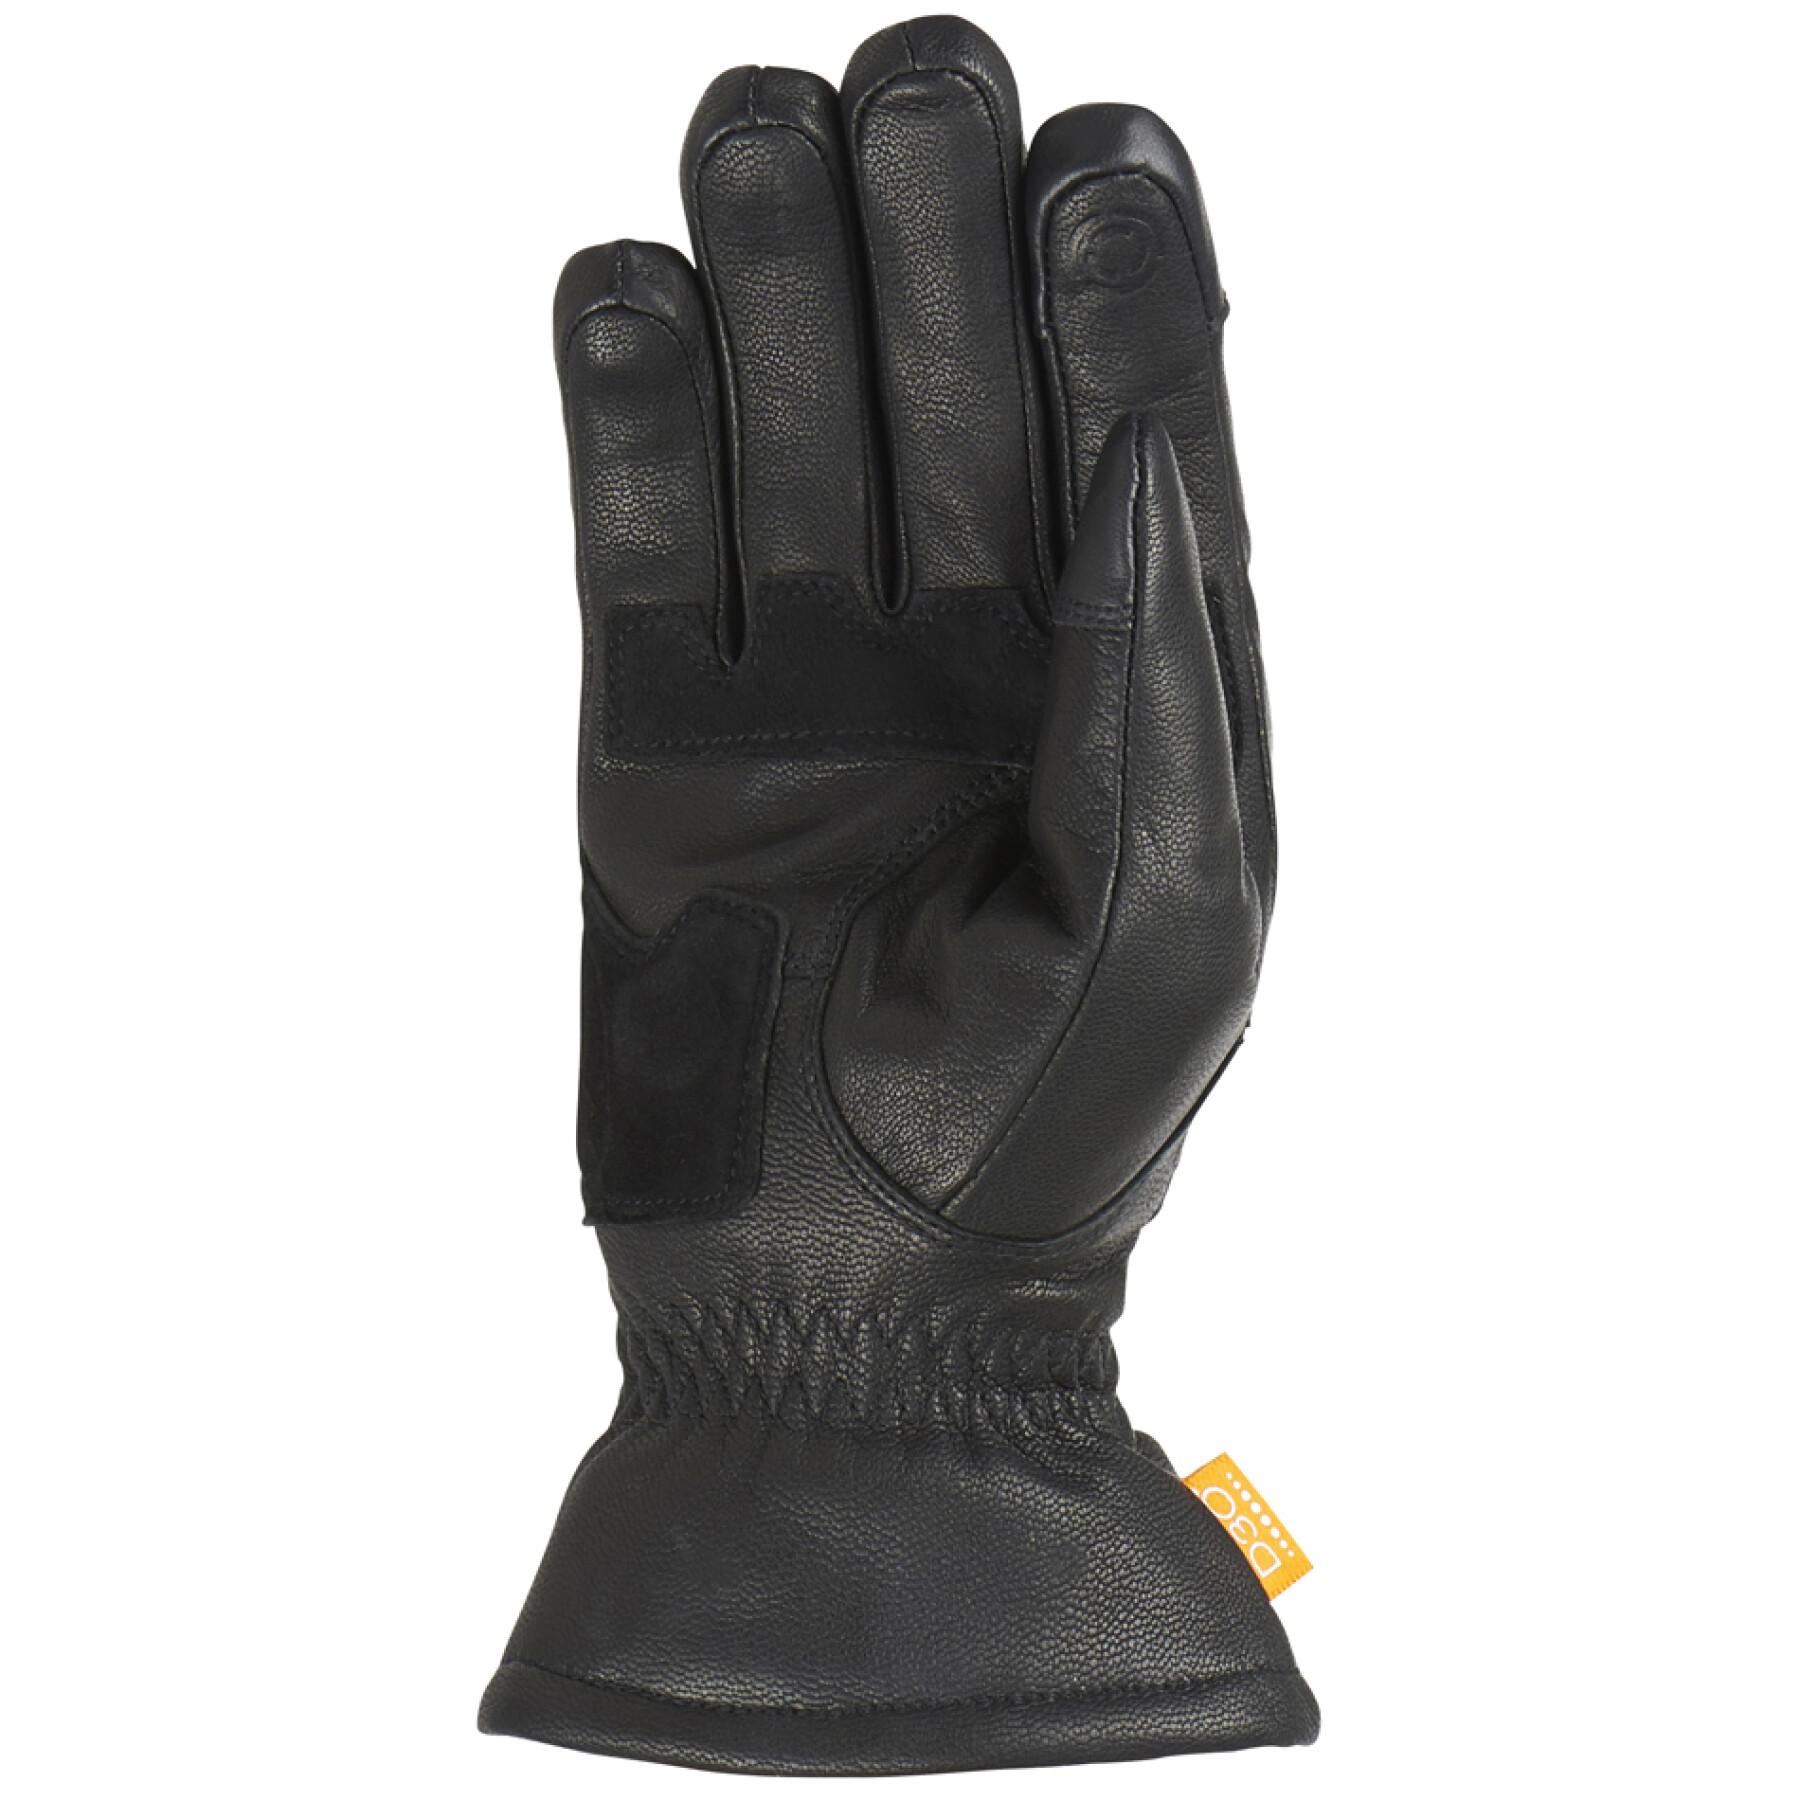 All season motorcycle gloves Furygan Midland D3O